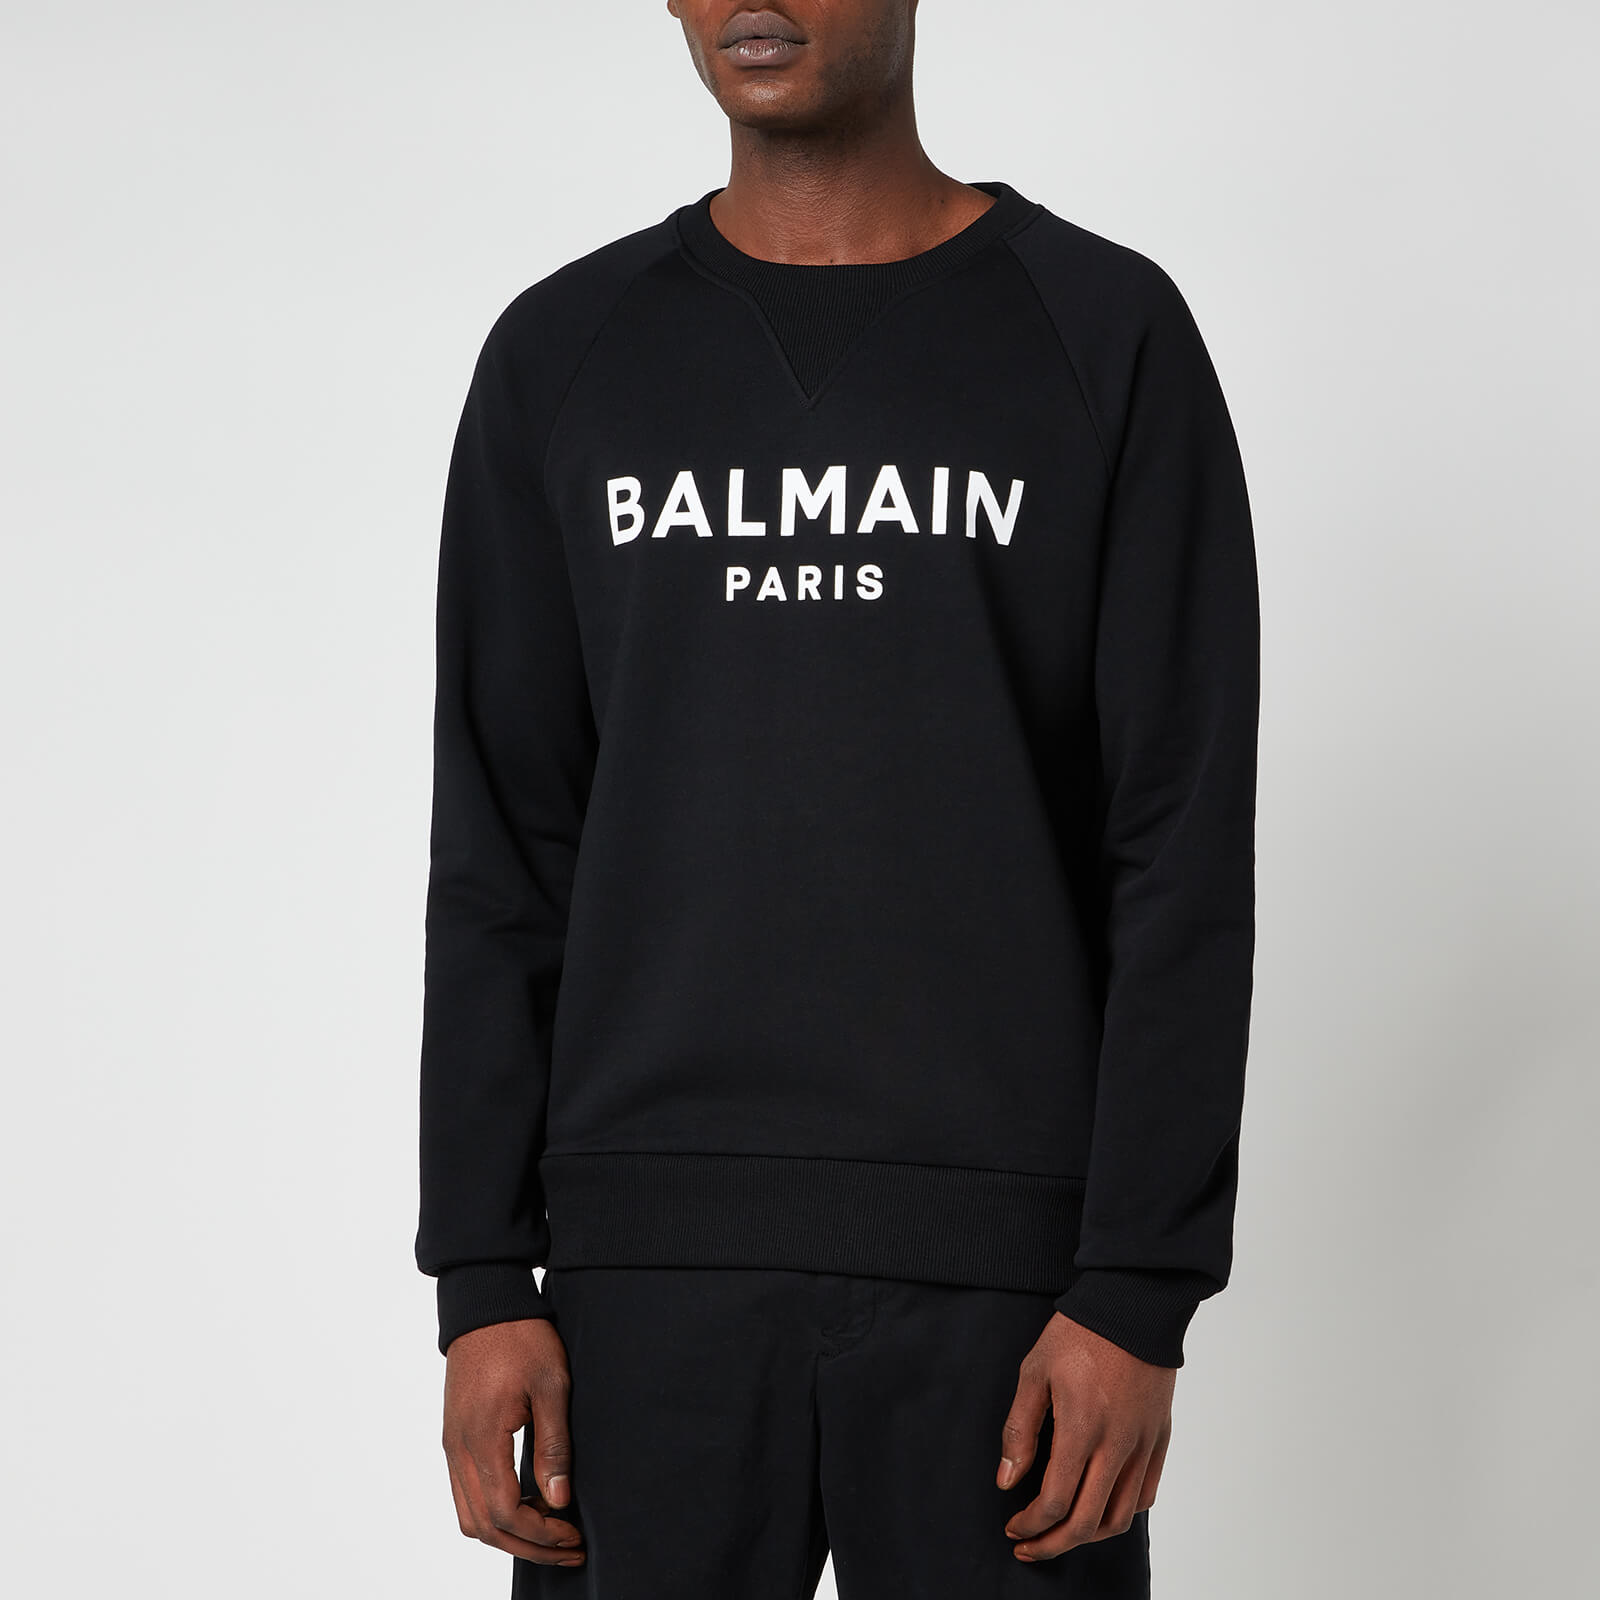 Balmain Men's Printed Sweatshirt - Black/White - L